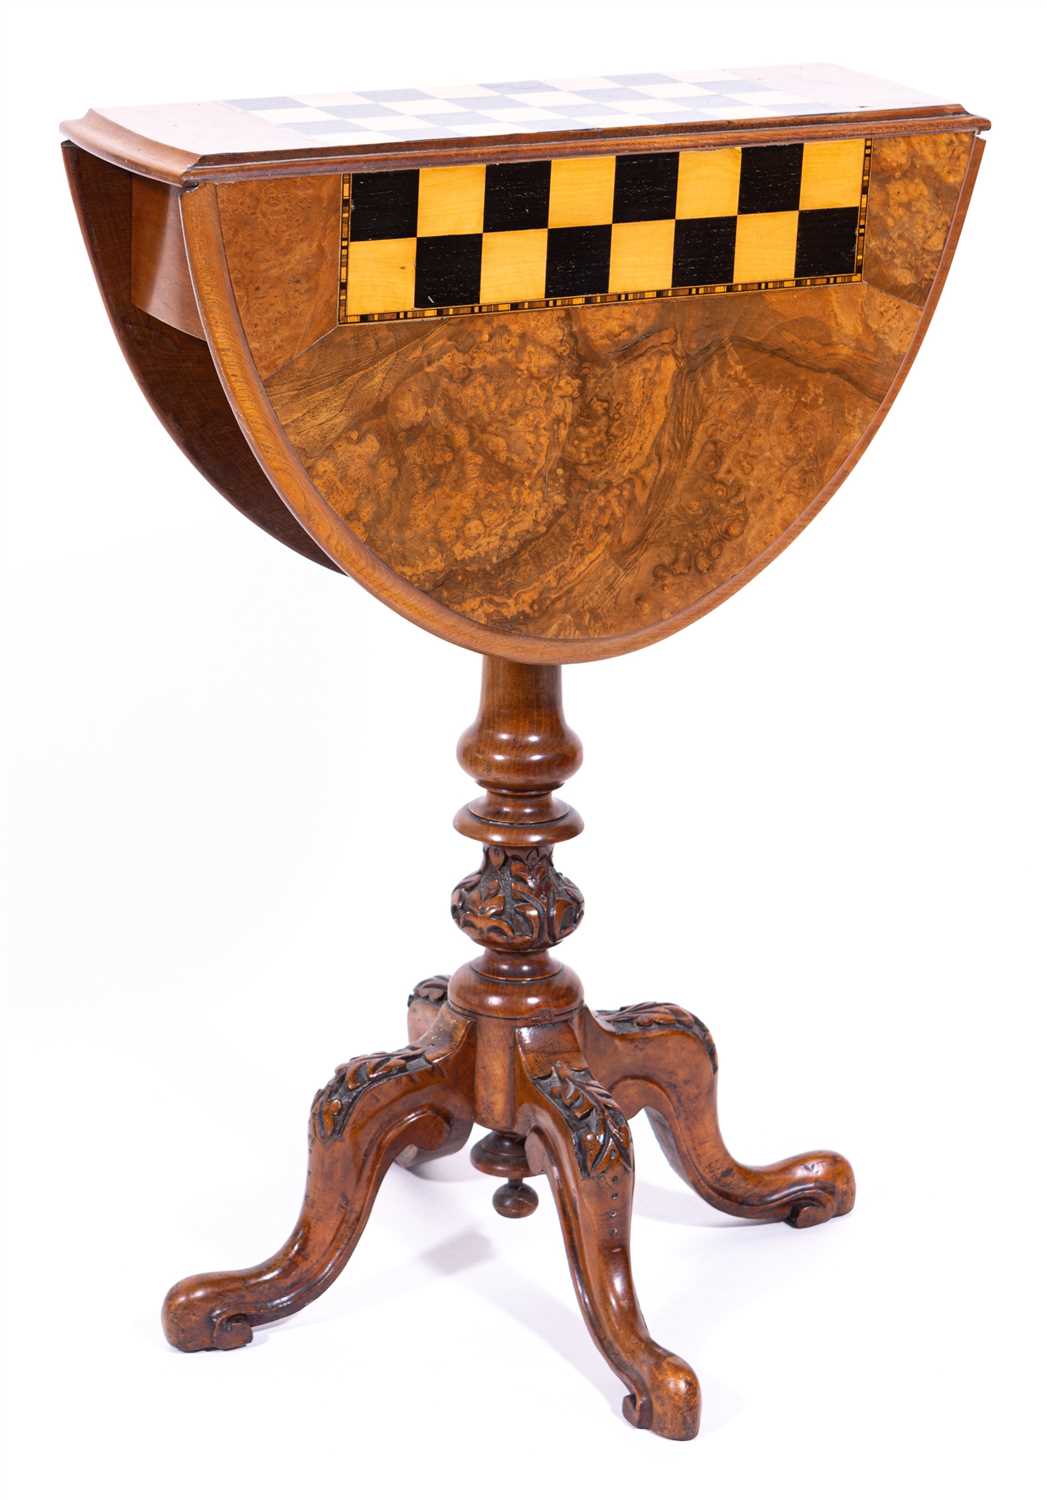 Lot 489 - A Victorian figured walnut drop-leaf games table